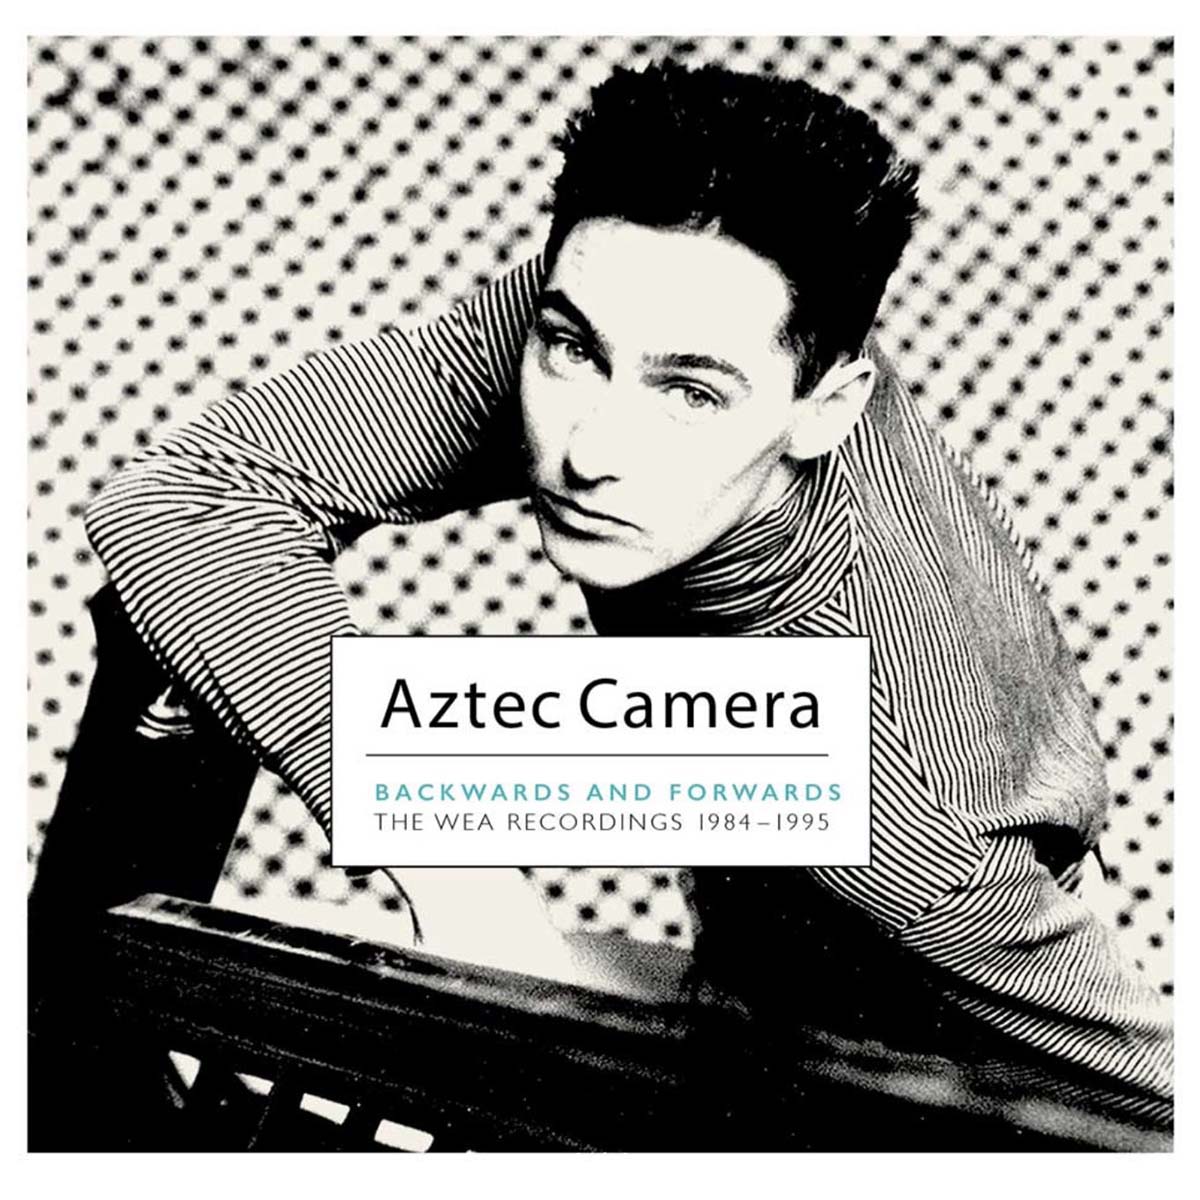 Aztec Camera - Backwards & Forwards (The Wea Recordings 1984-1995)